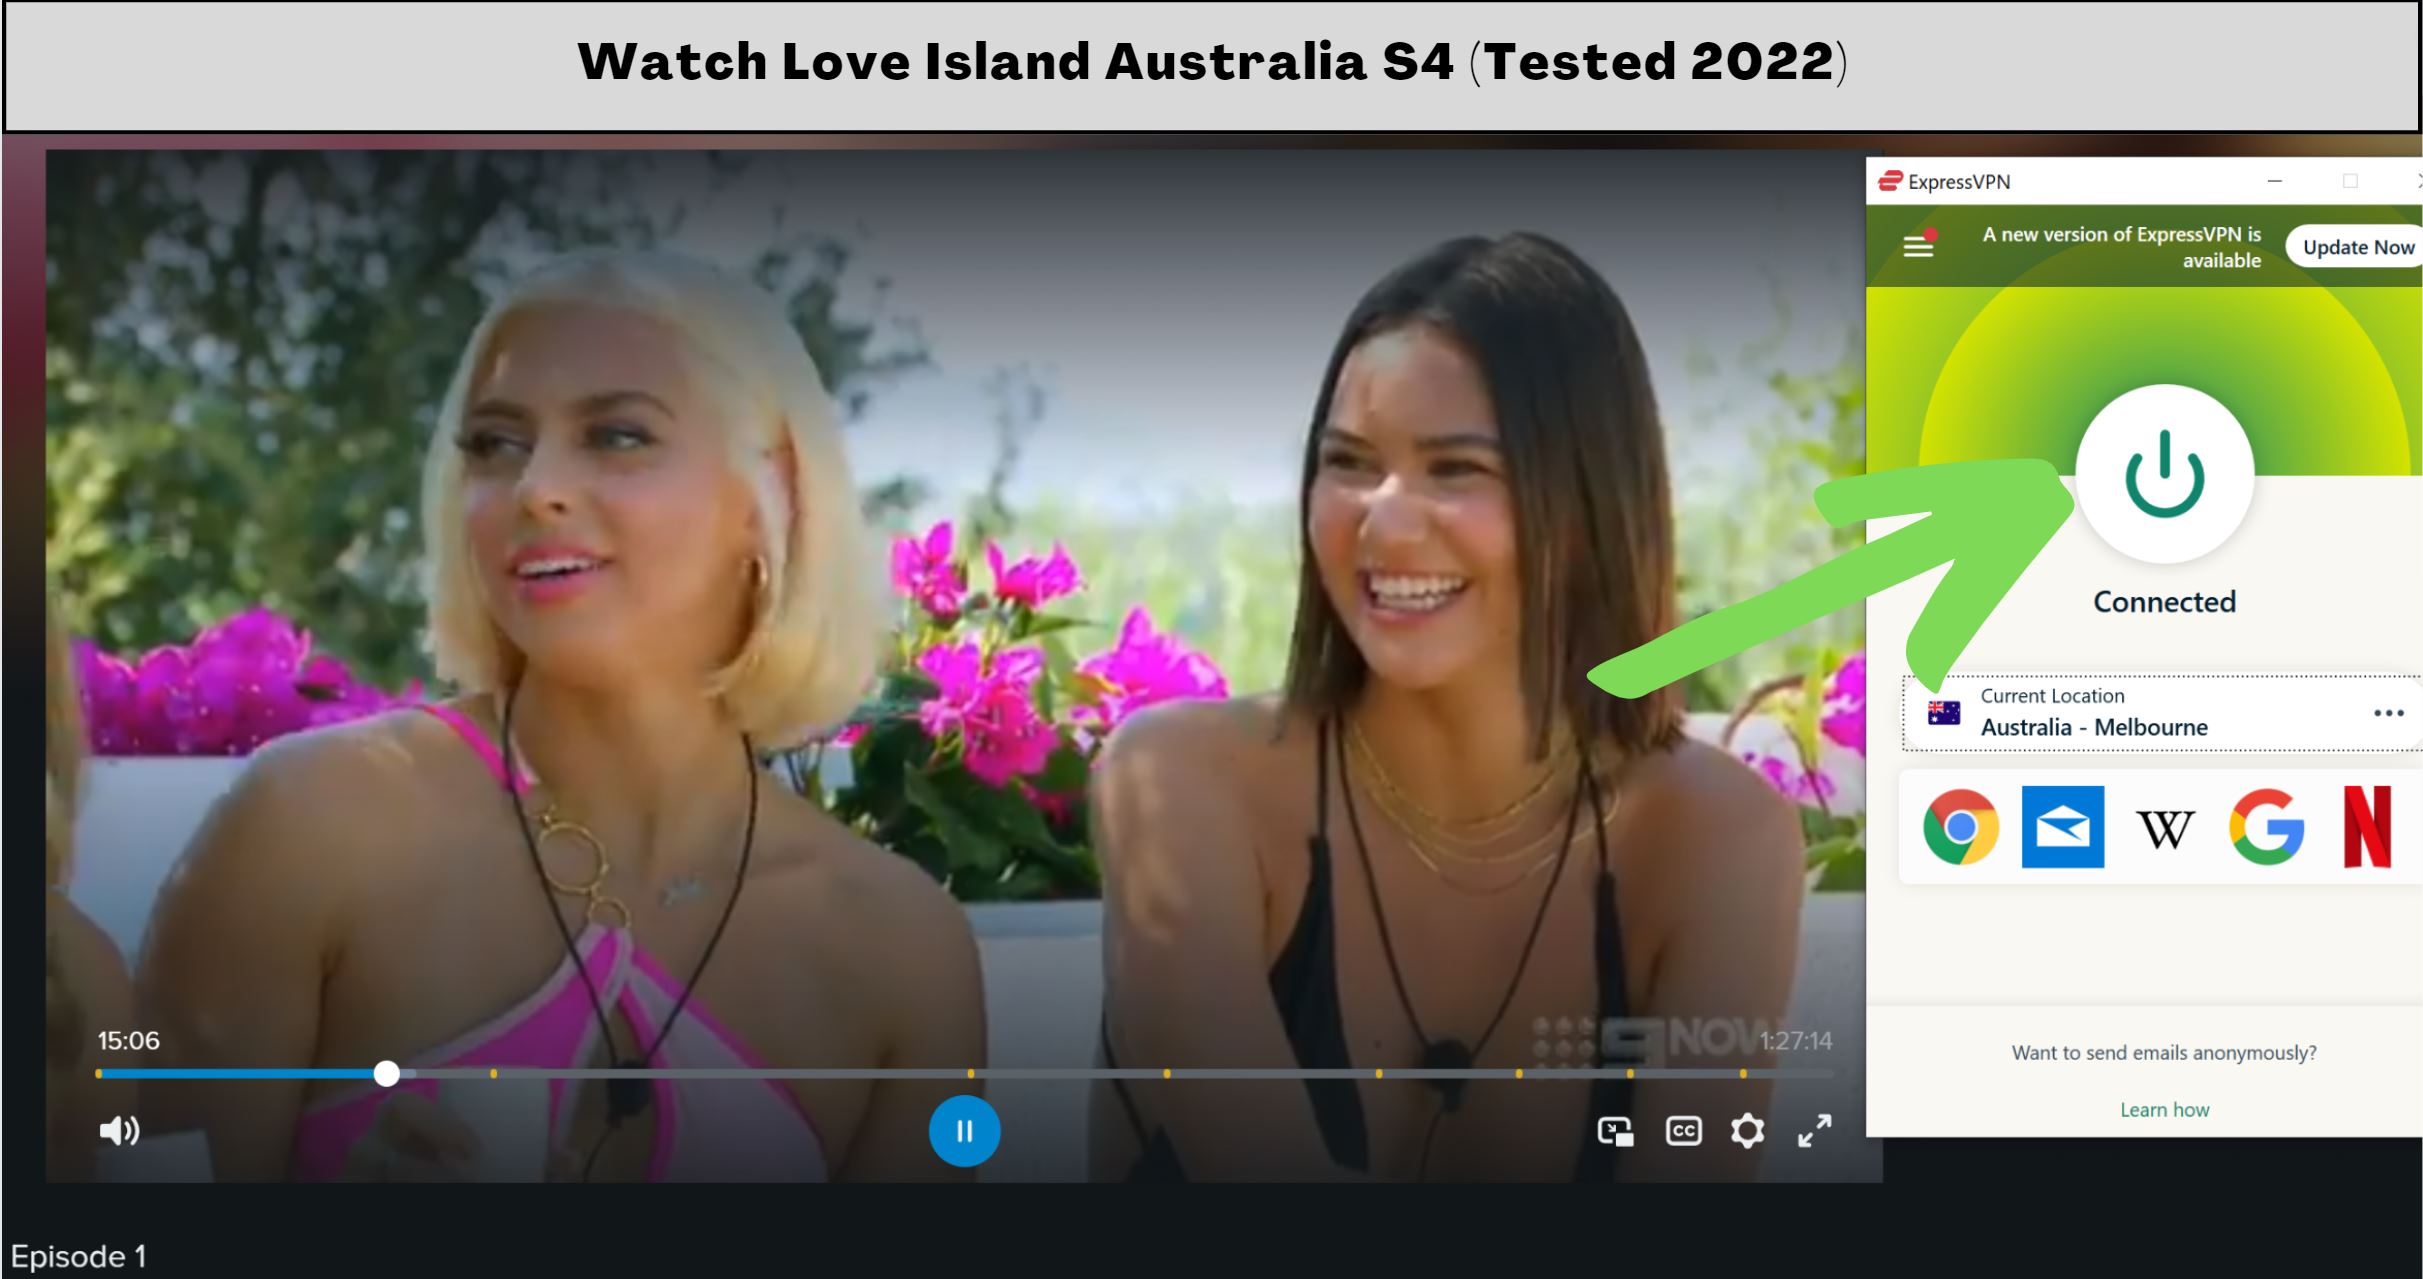 Love Island Australia Season 4